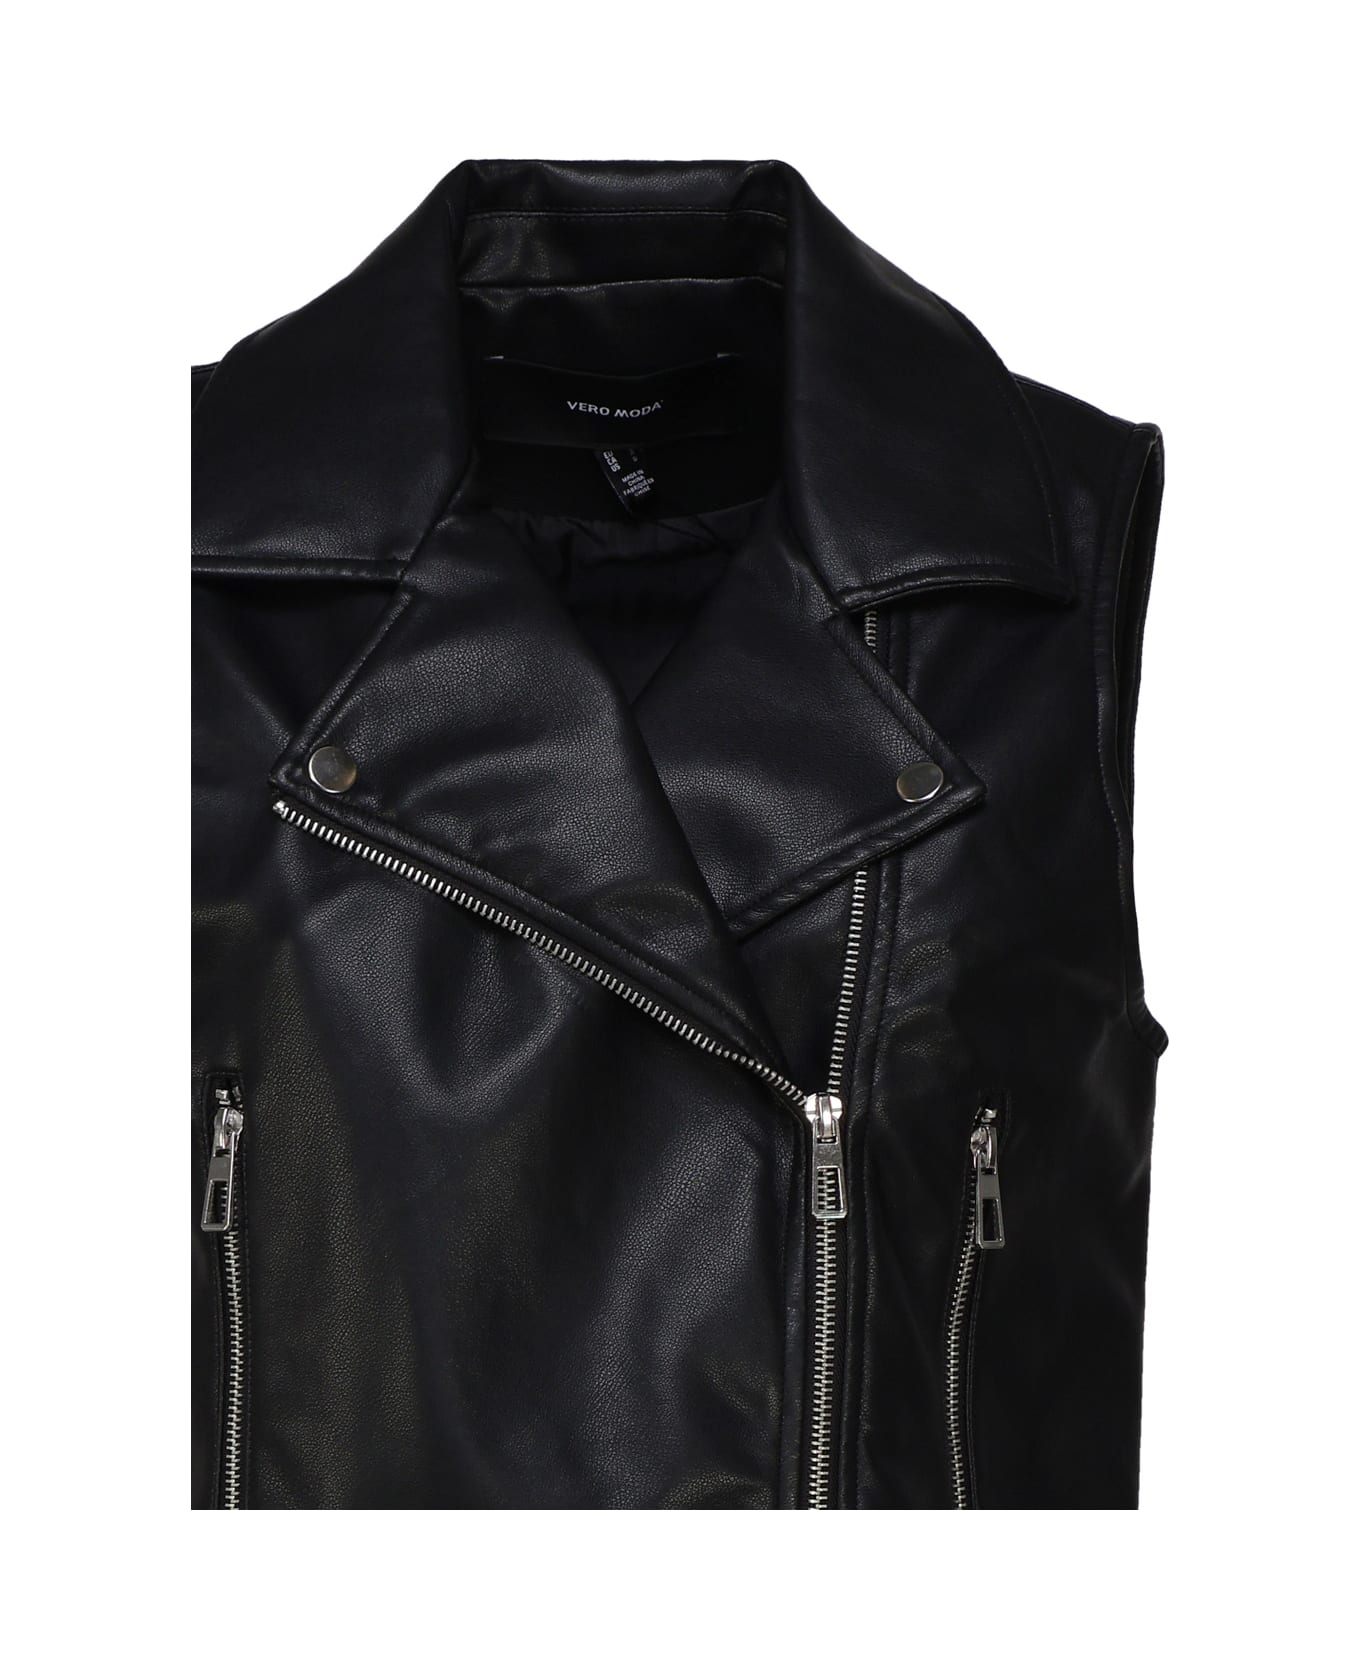 Vero Moda Biker Style Eco-leather Vest - Black